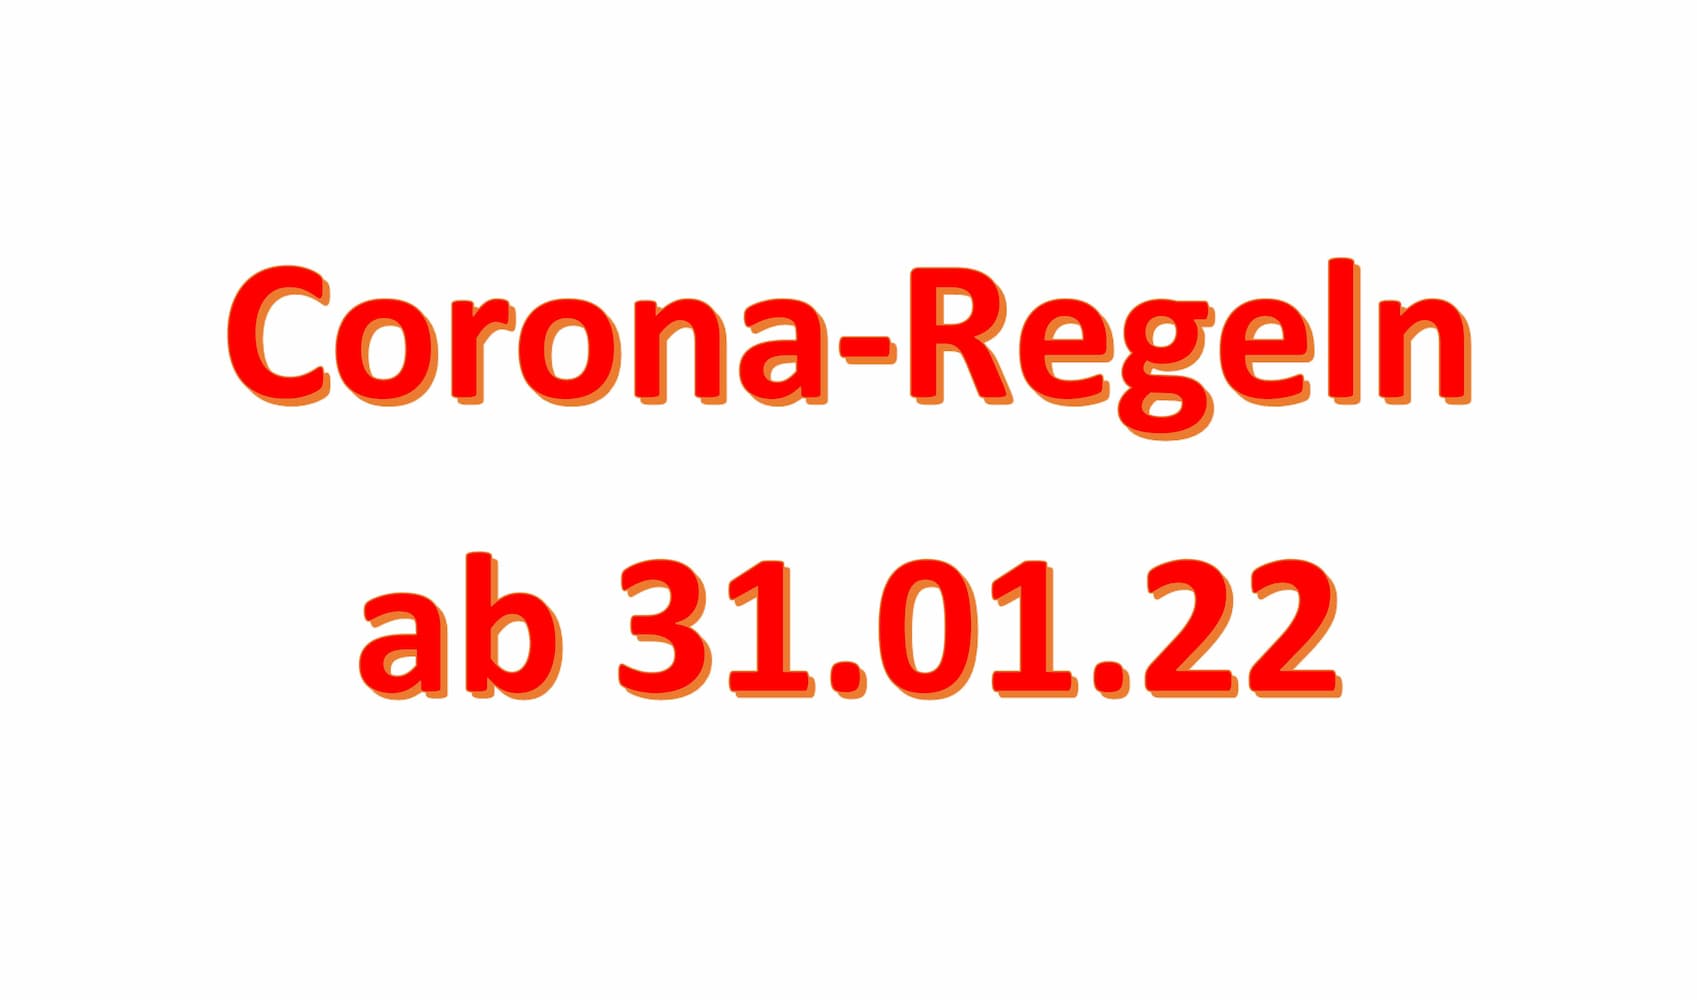 Corona-Regeln ab 31.01.22